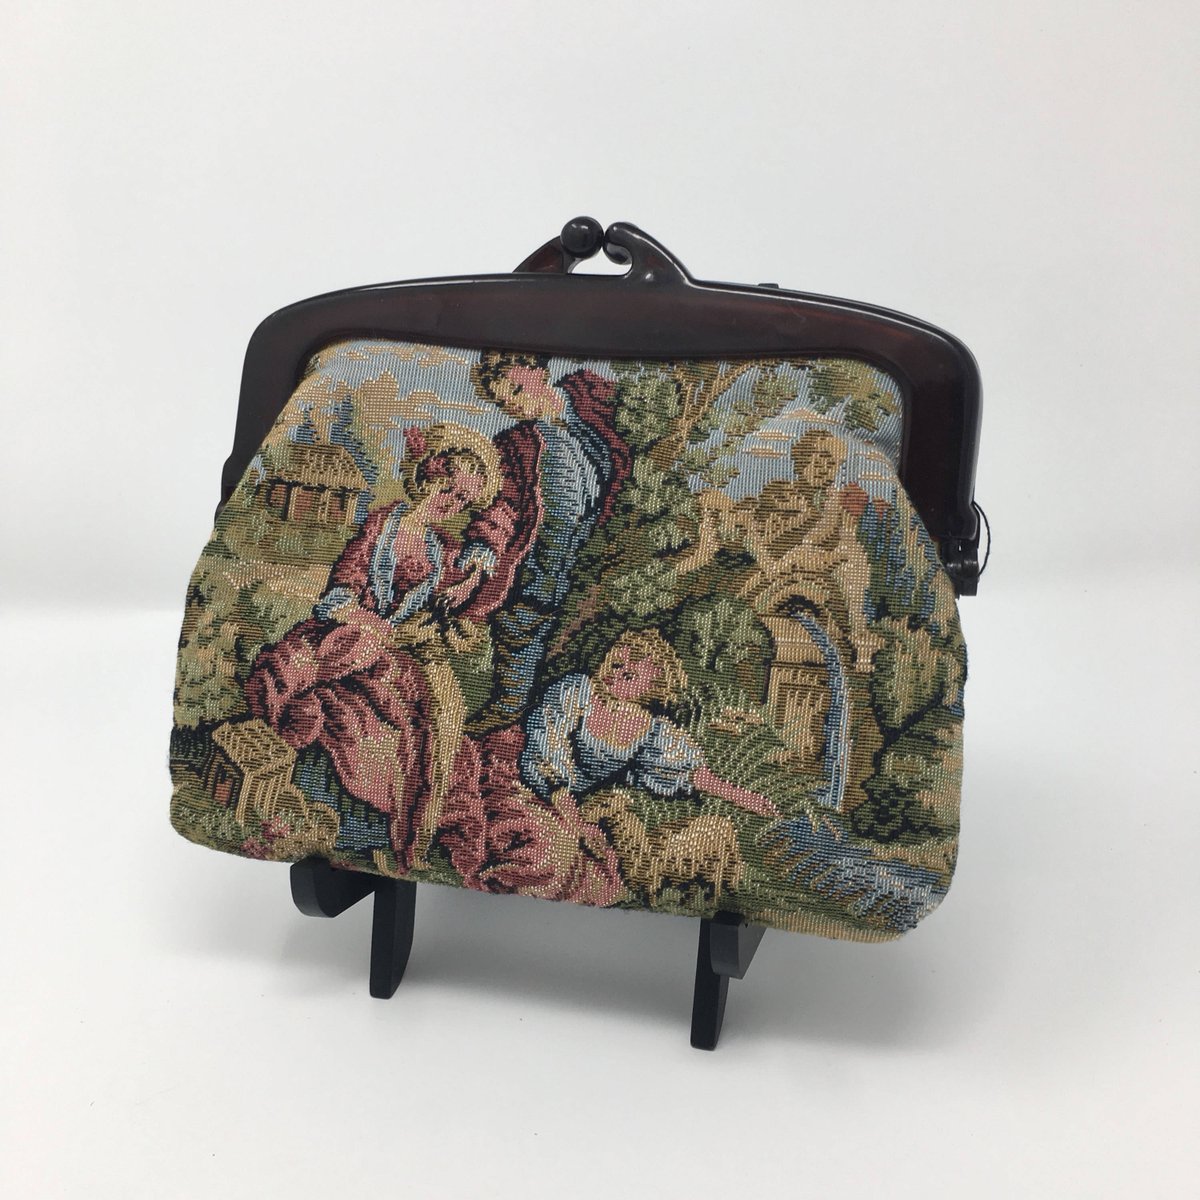 Retro Vintage Tapestry BoHo Bag Purse Clutch Handbag by La Regal LTD etsy.me/2I7UVzC #etsyseller #antique #Jazz #FaatEtsyShop #mug #etsyvintage #vintage #SmallHandbag